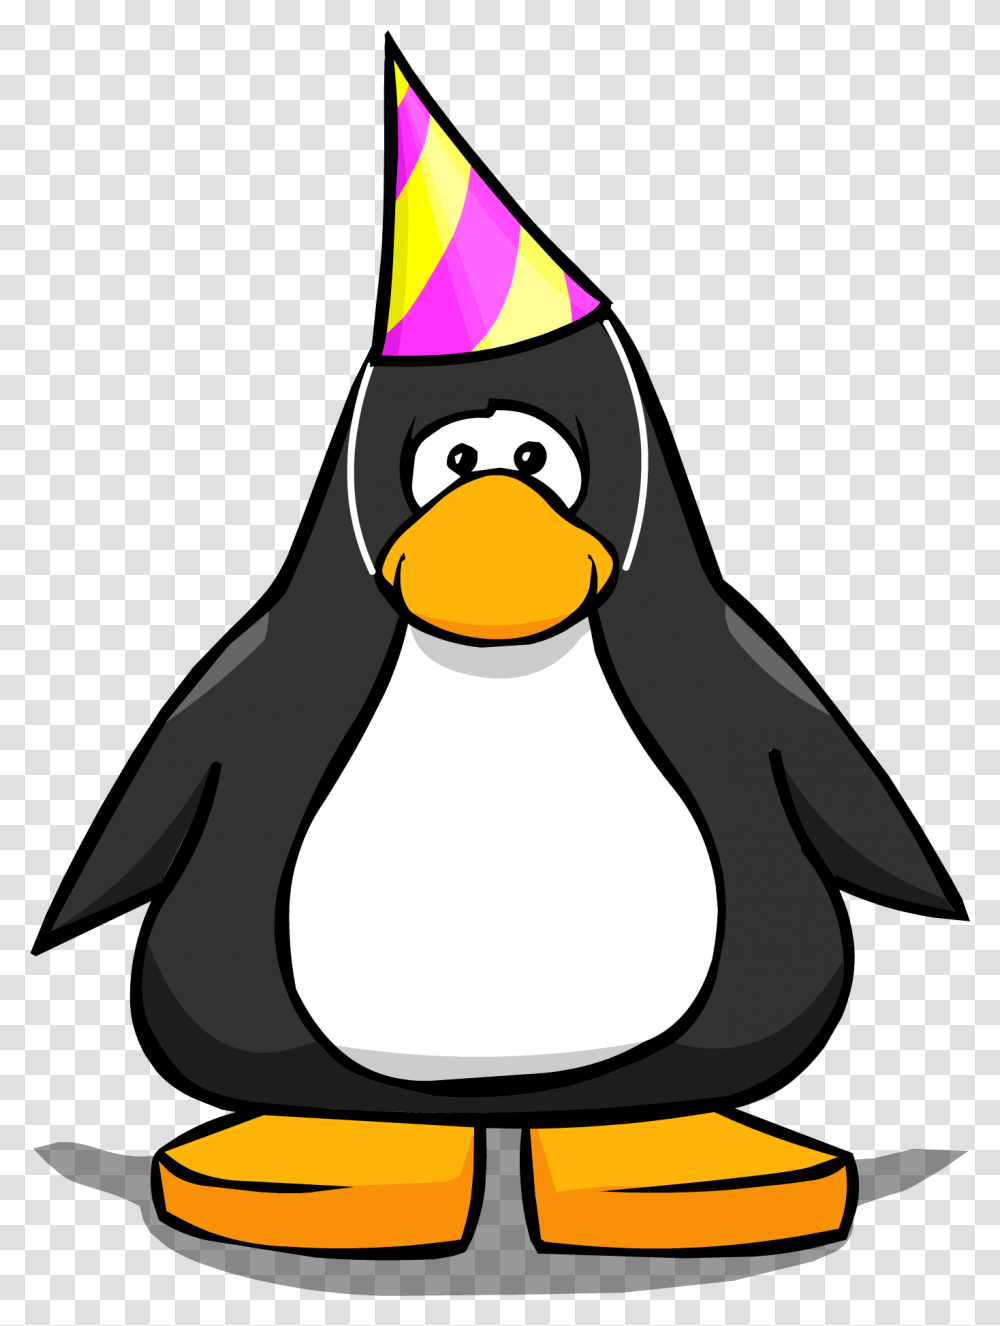 Club Penguin Wiki Penguin With Santa Hat, Apparel, Party Hat, Bird Transparent Png